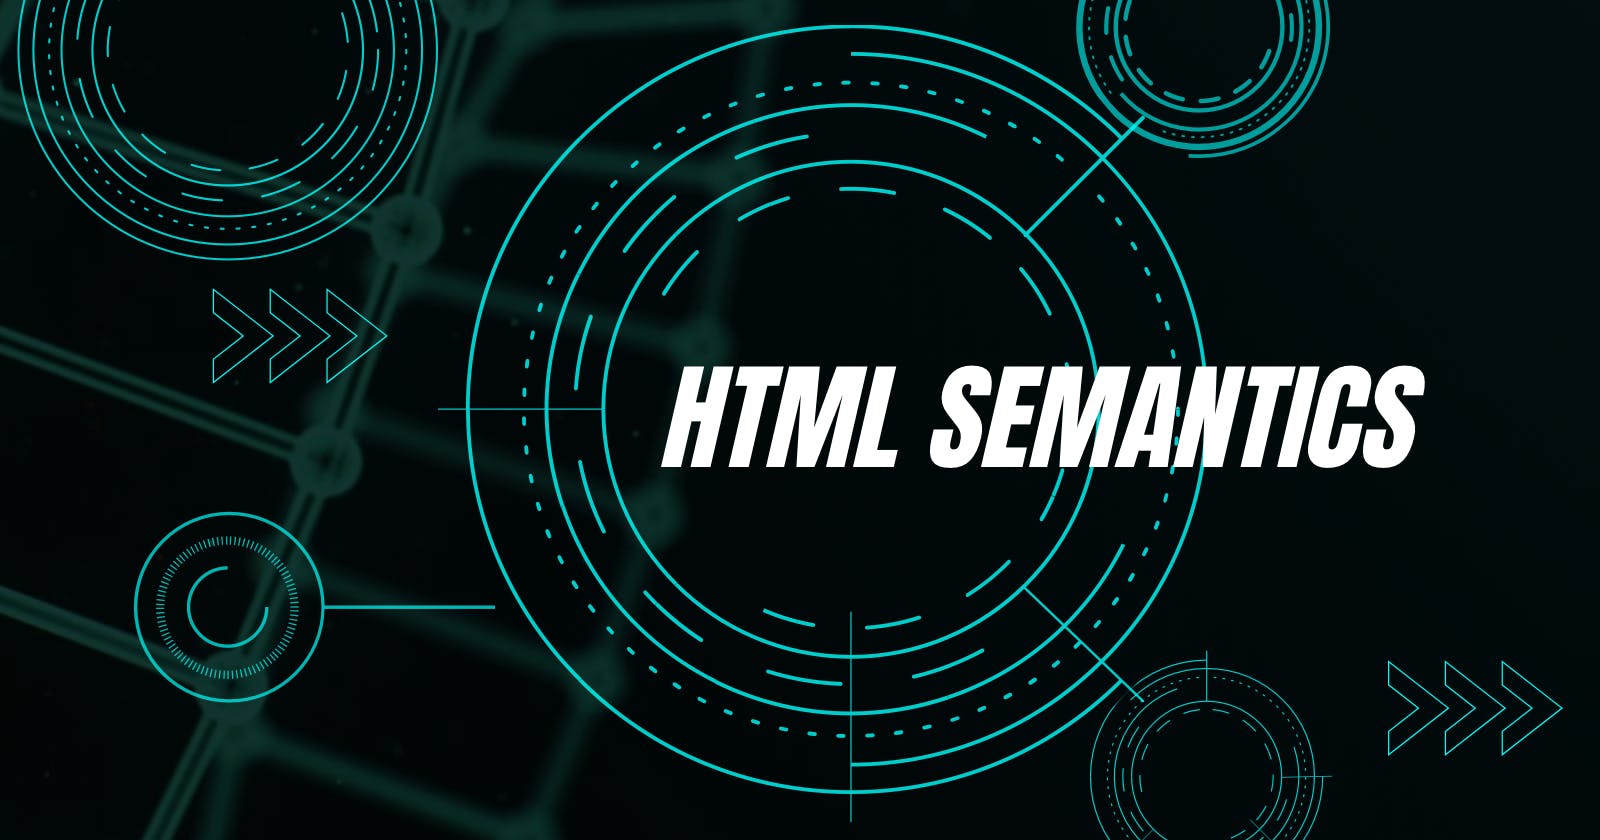 HTML Semantics: Crafting Meaningful web experiences